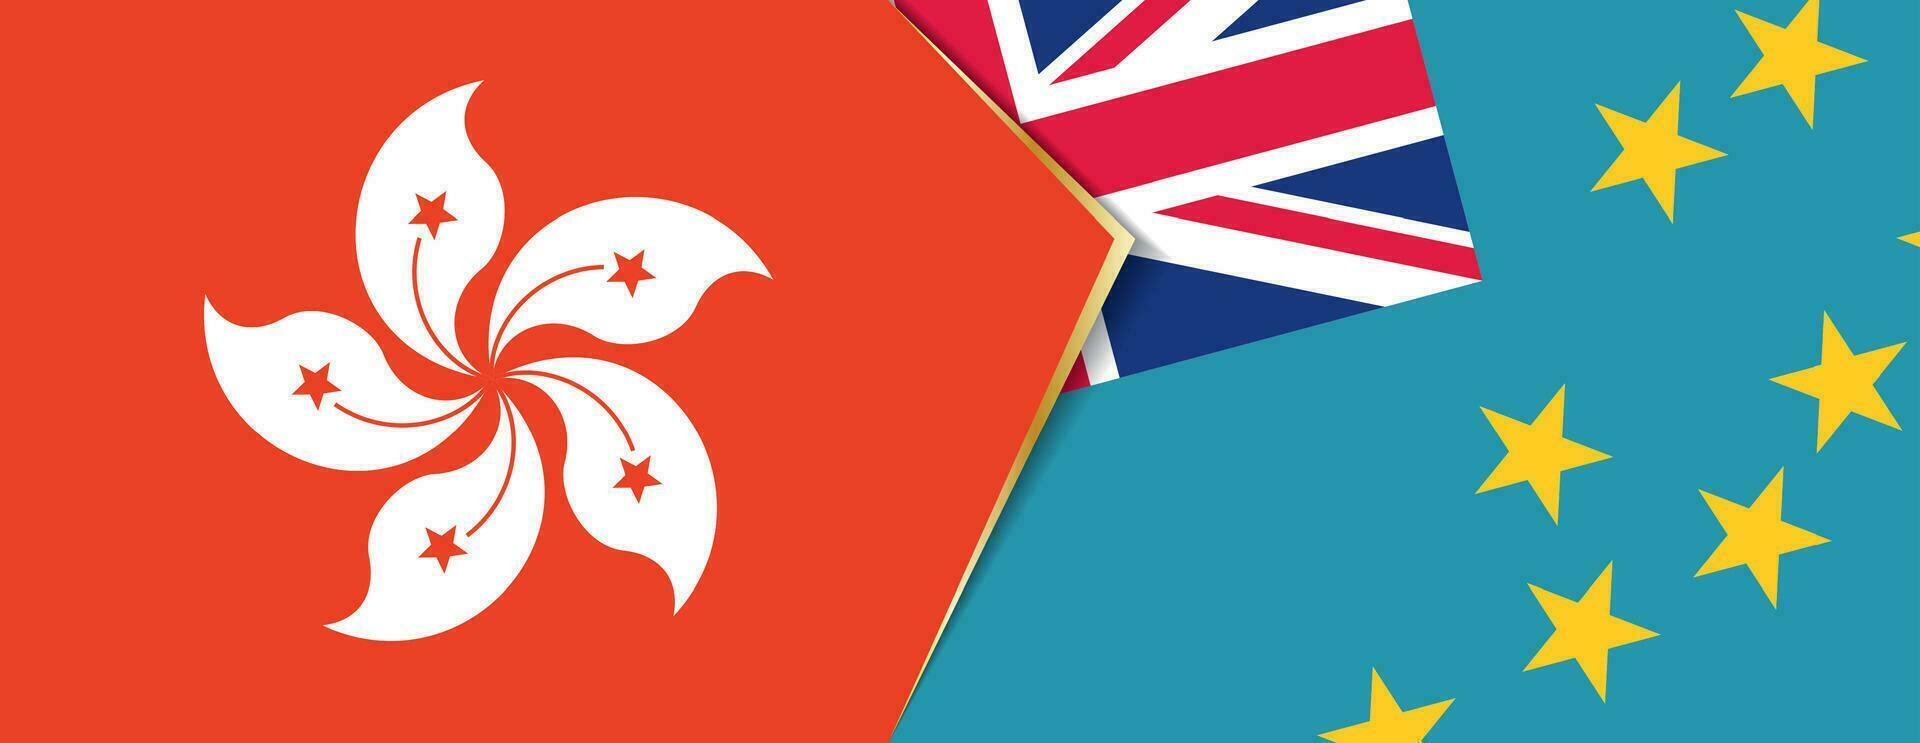 hong Kong en Tuvalu vlaggen, twee vector vlaggen.